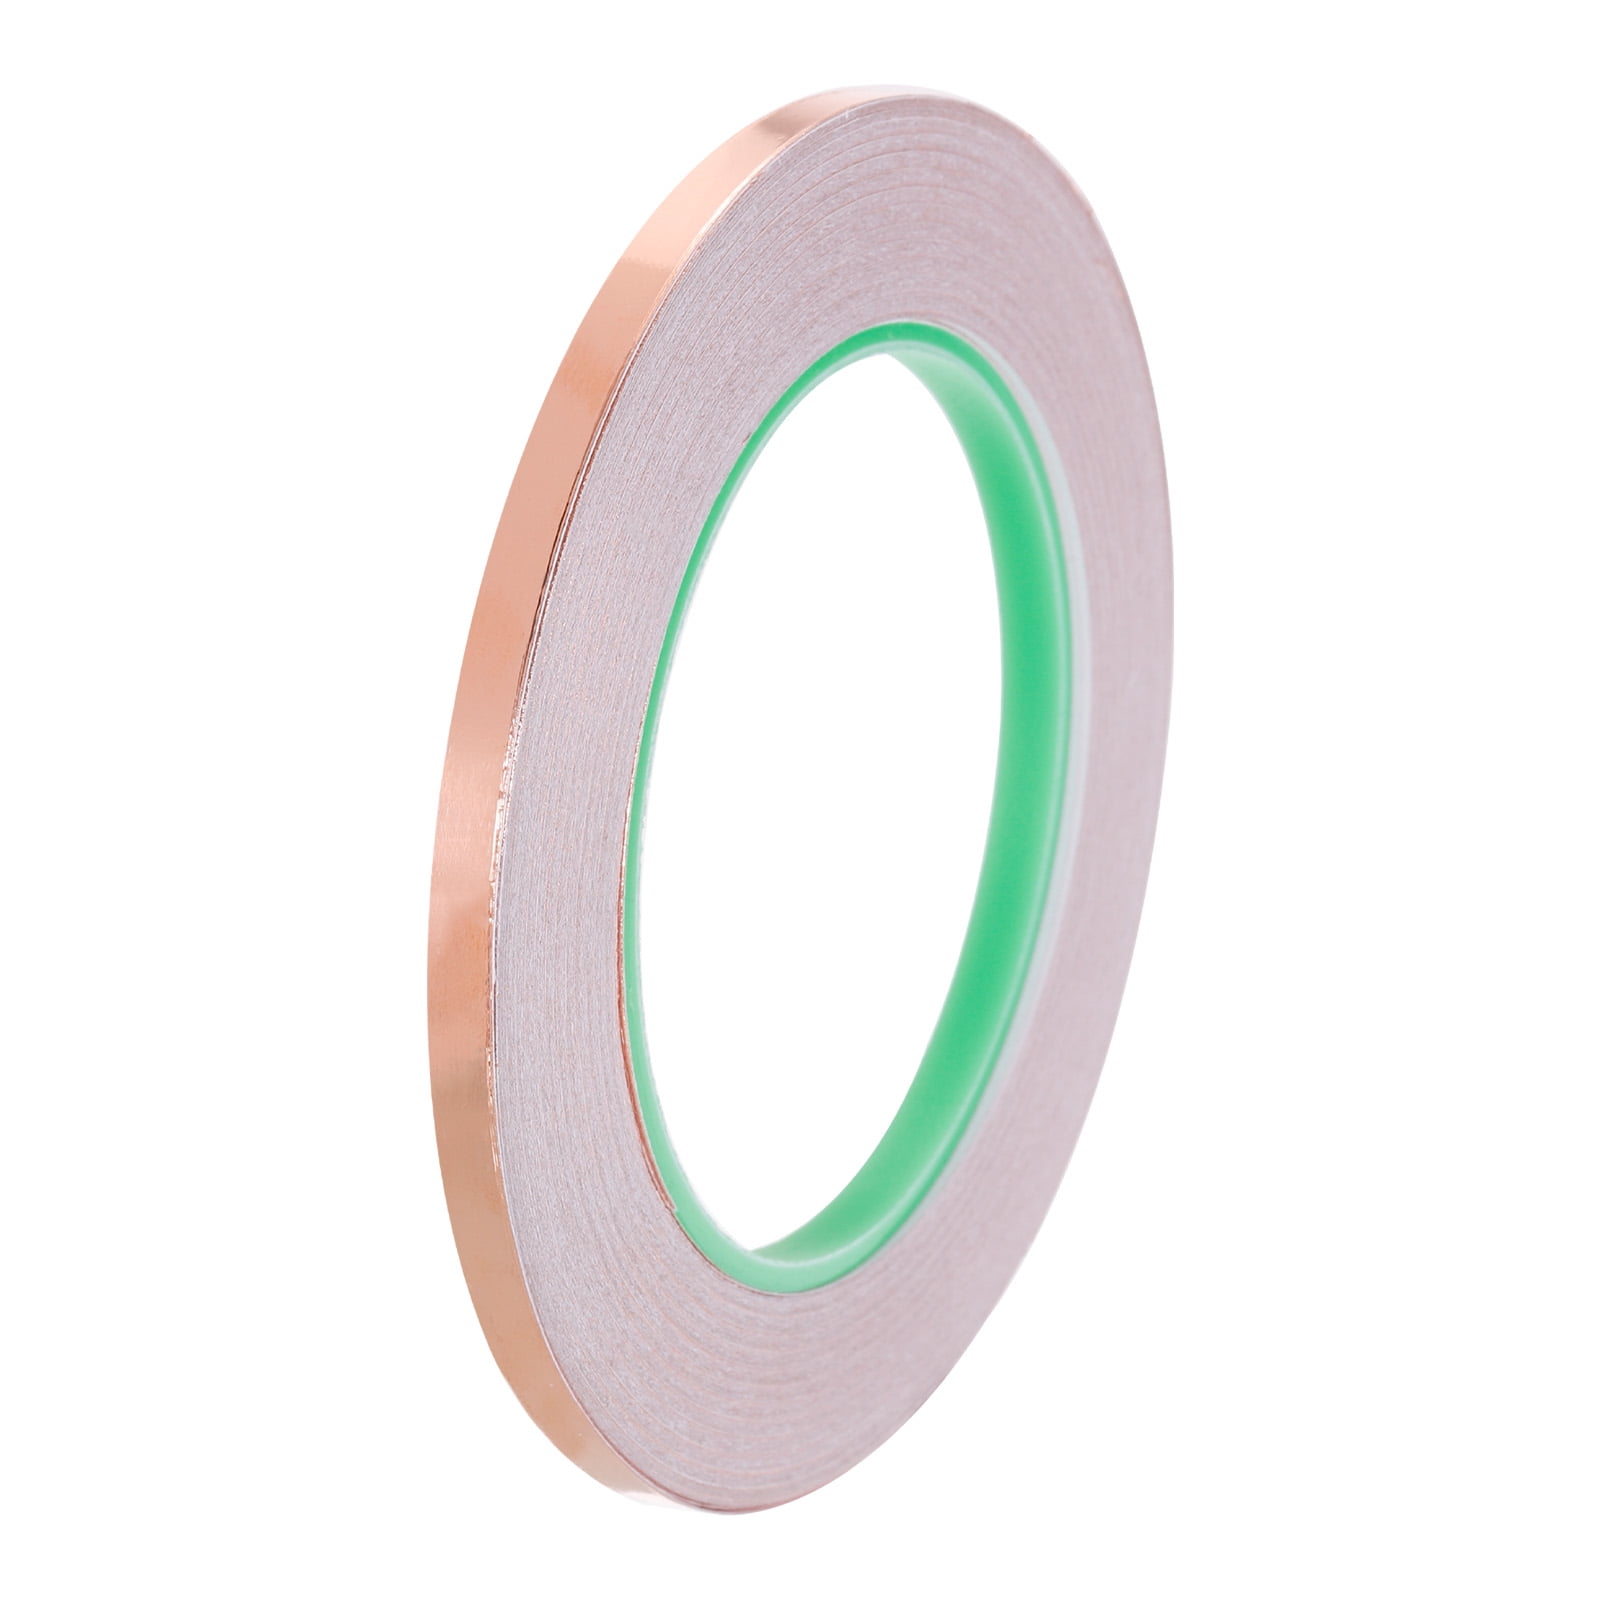 Uxcell Double Side Conductive Tape Copper Foil Tape 0.31 inch x 65.6ft for EMI Shielding 2 Pcs, Bronze